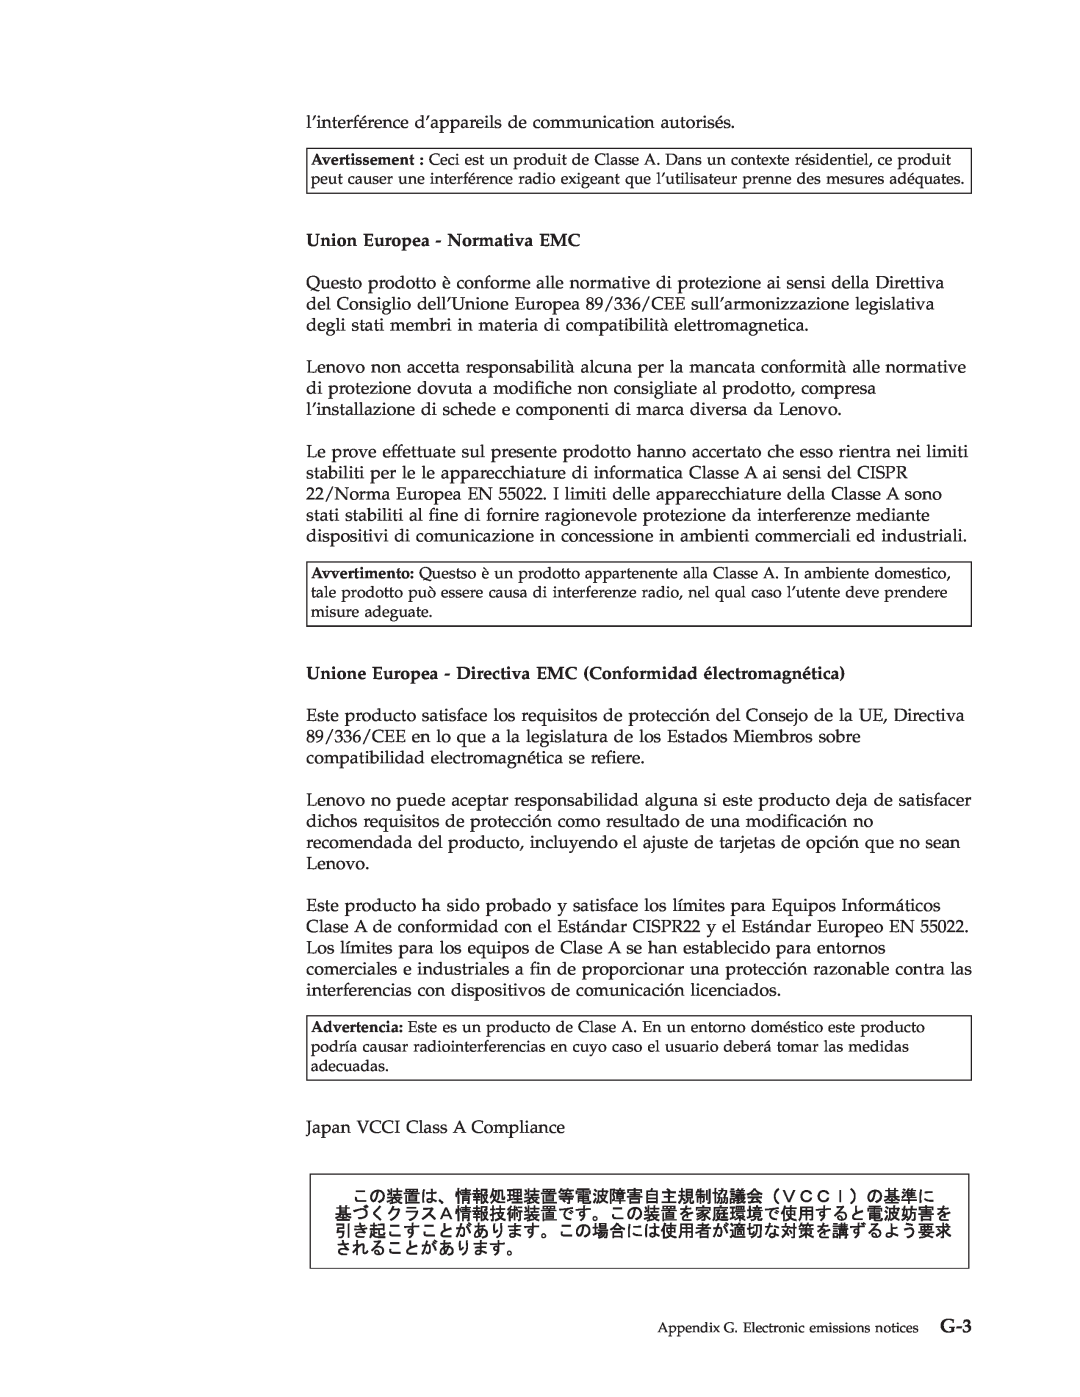 Lenovo C400 manual Union Europea - Normativa EMC 